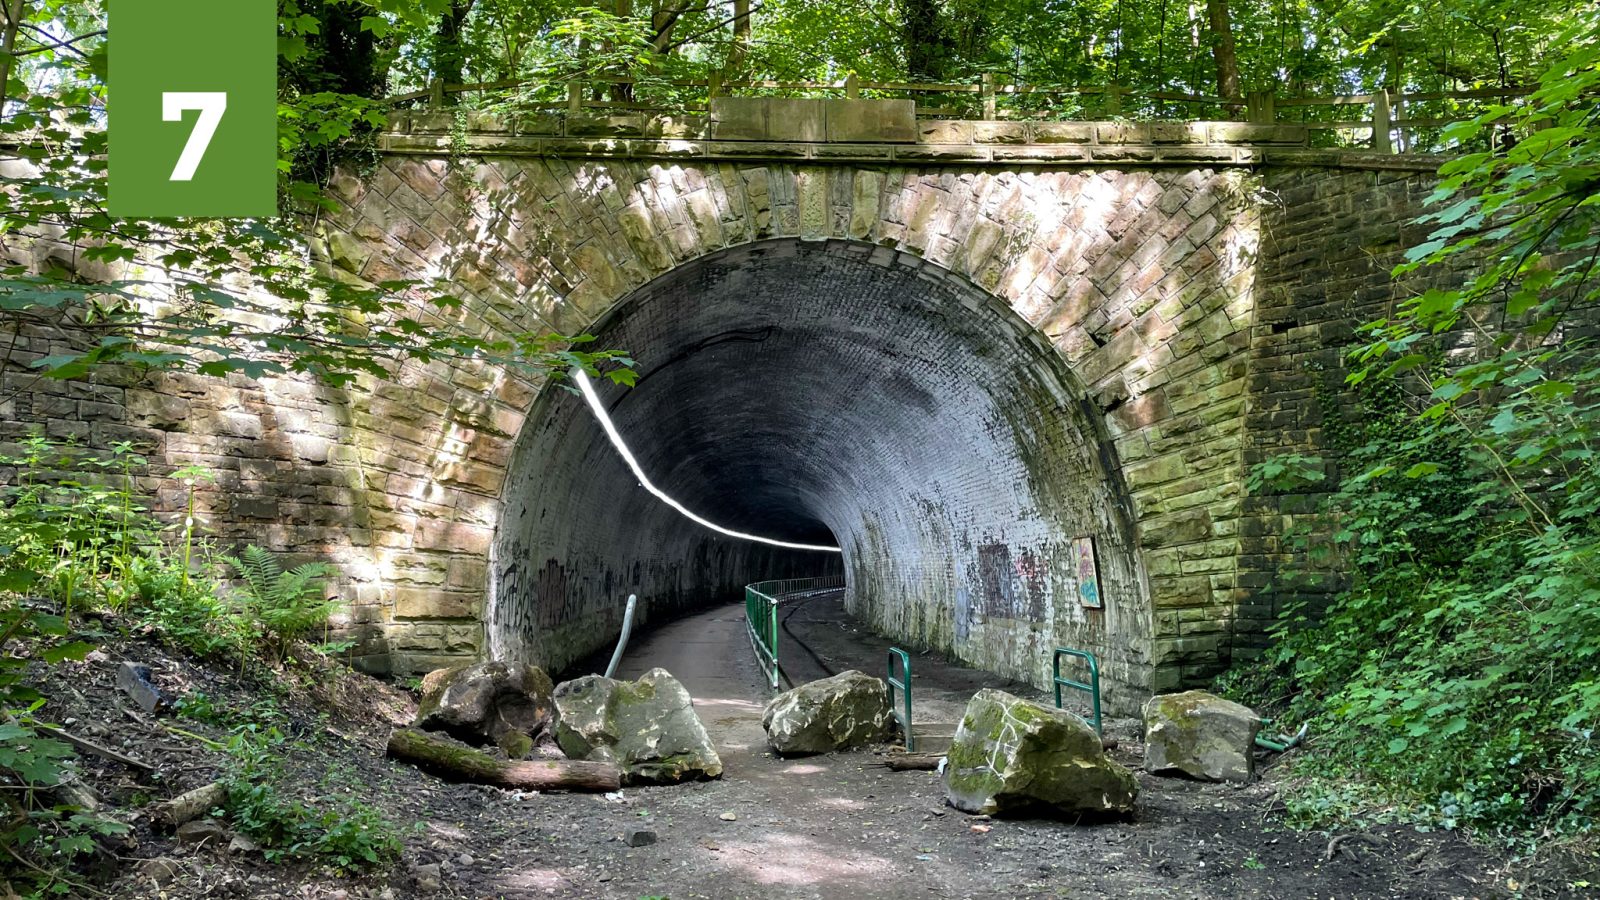 Brinnington Tunnel